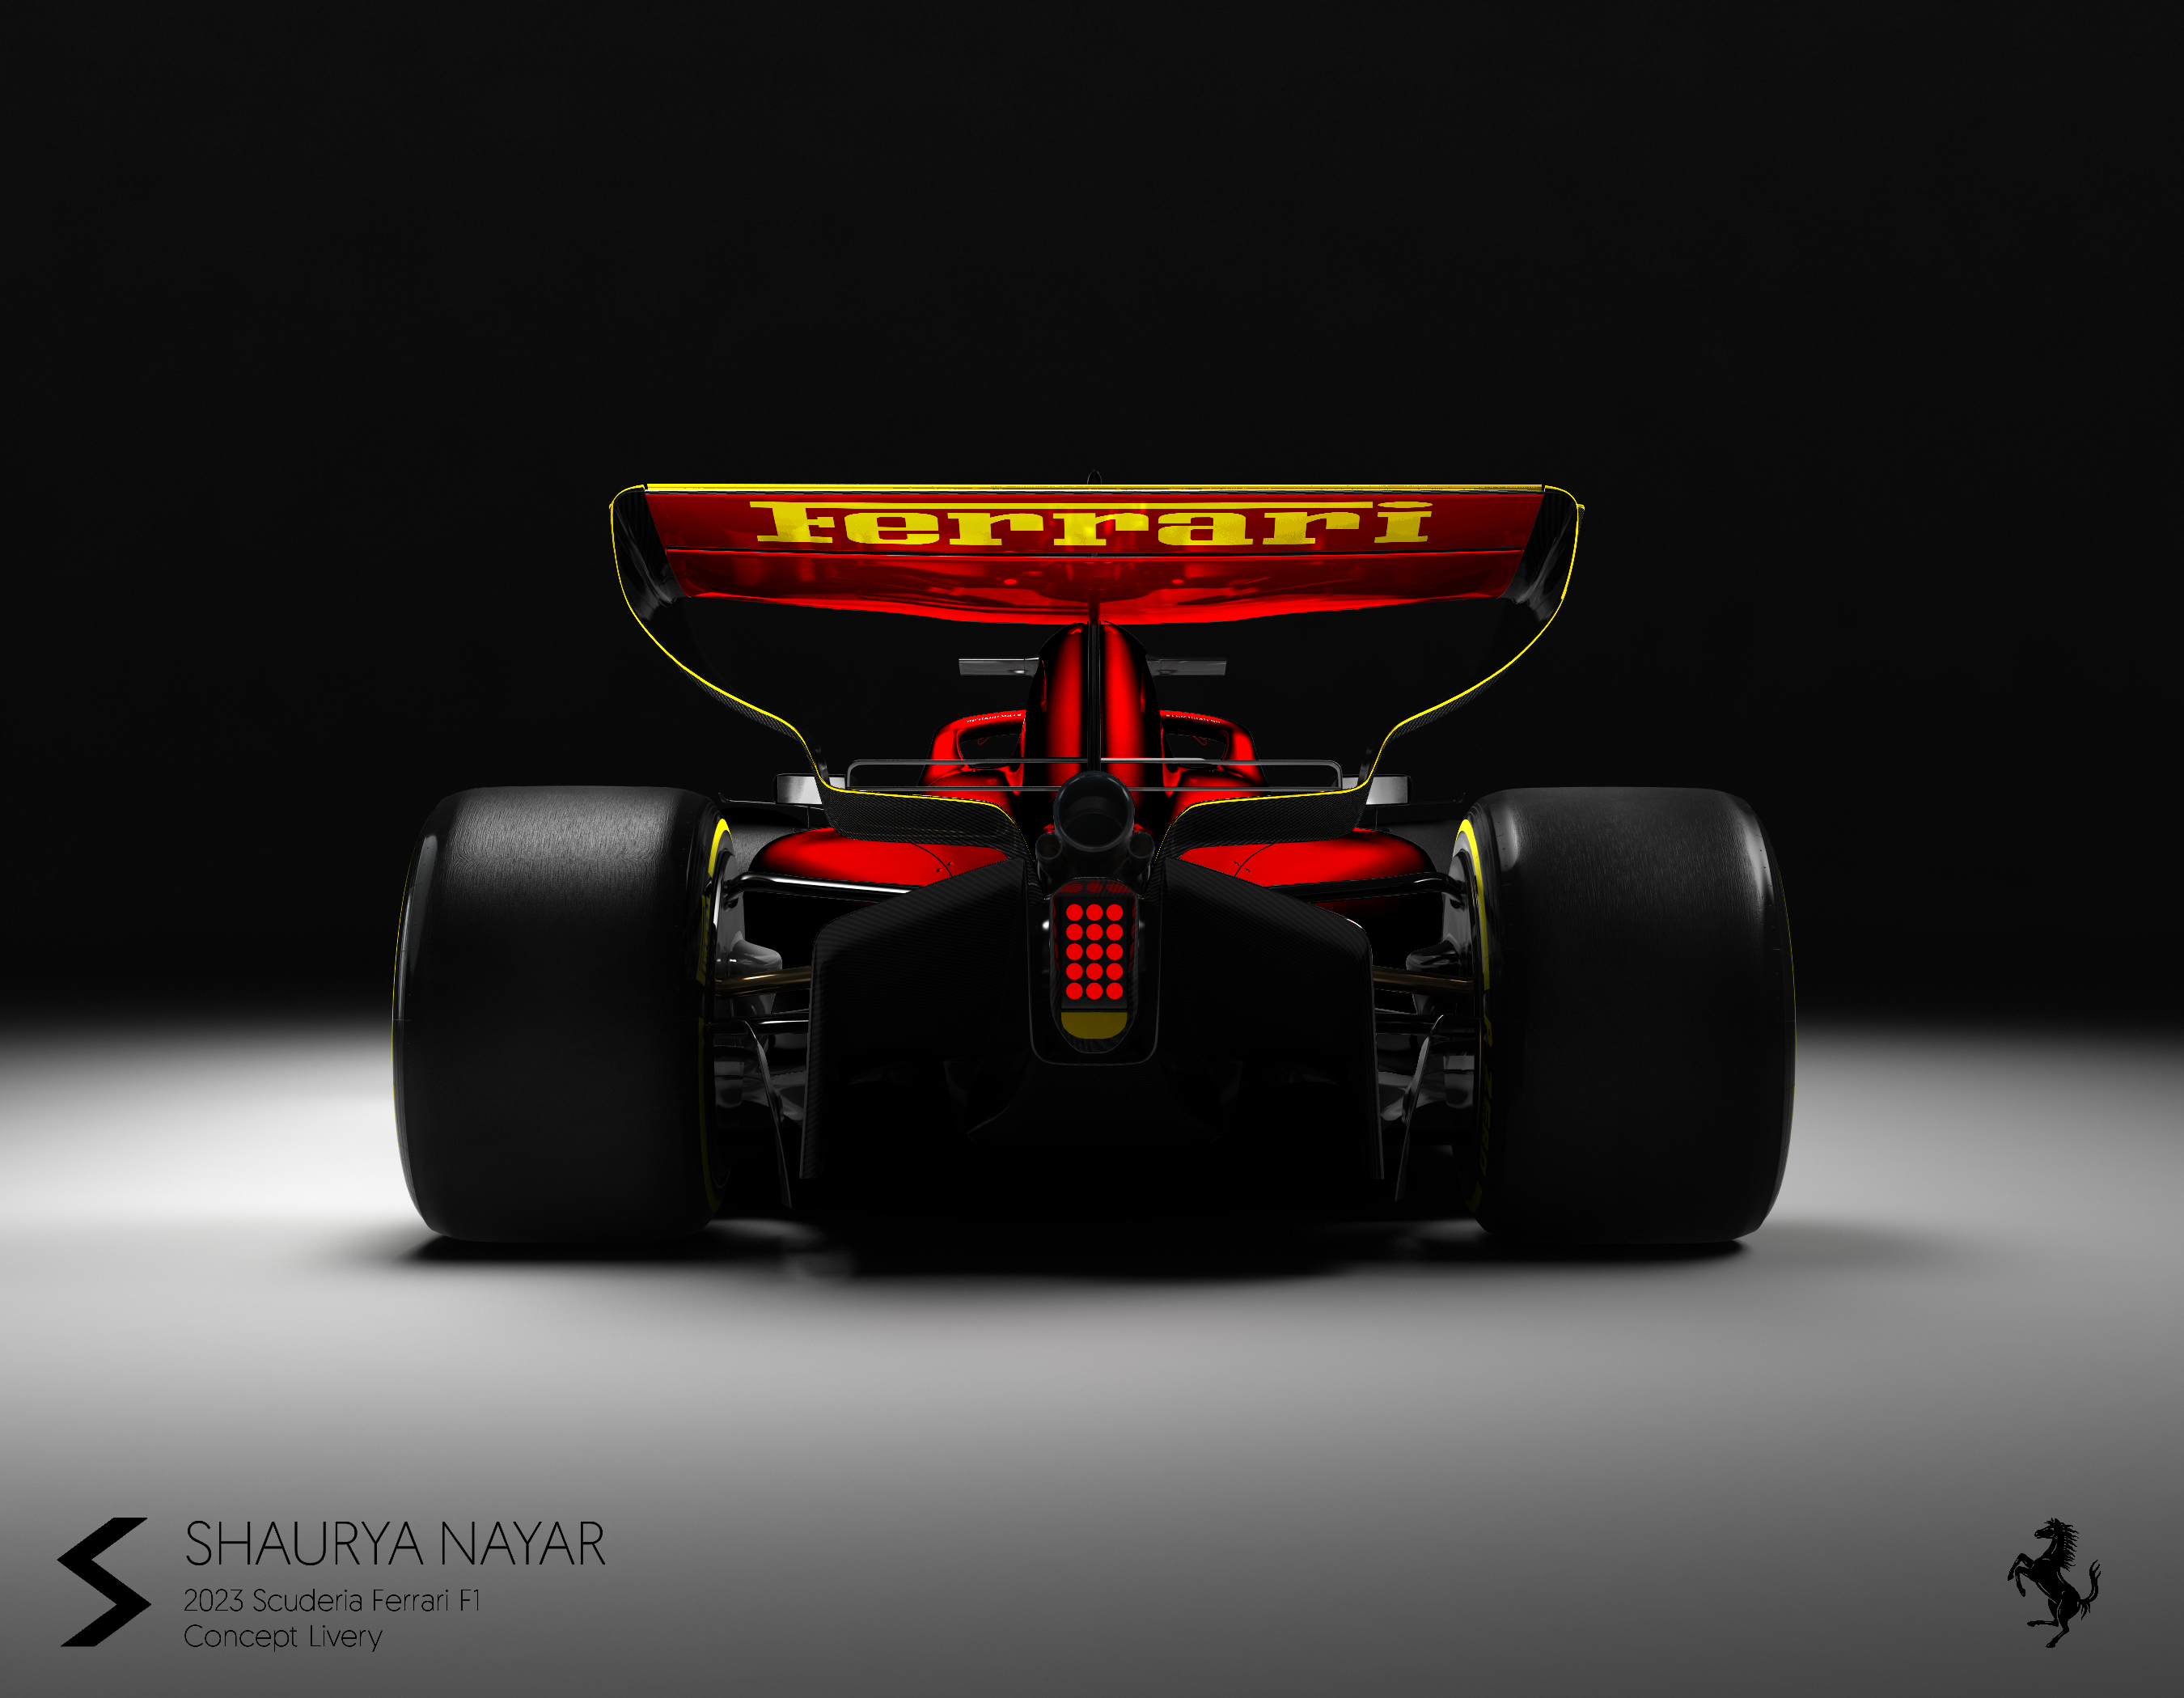 My Scuderia Ferrari F1 Concept Livery Hope You Like It R